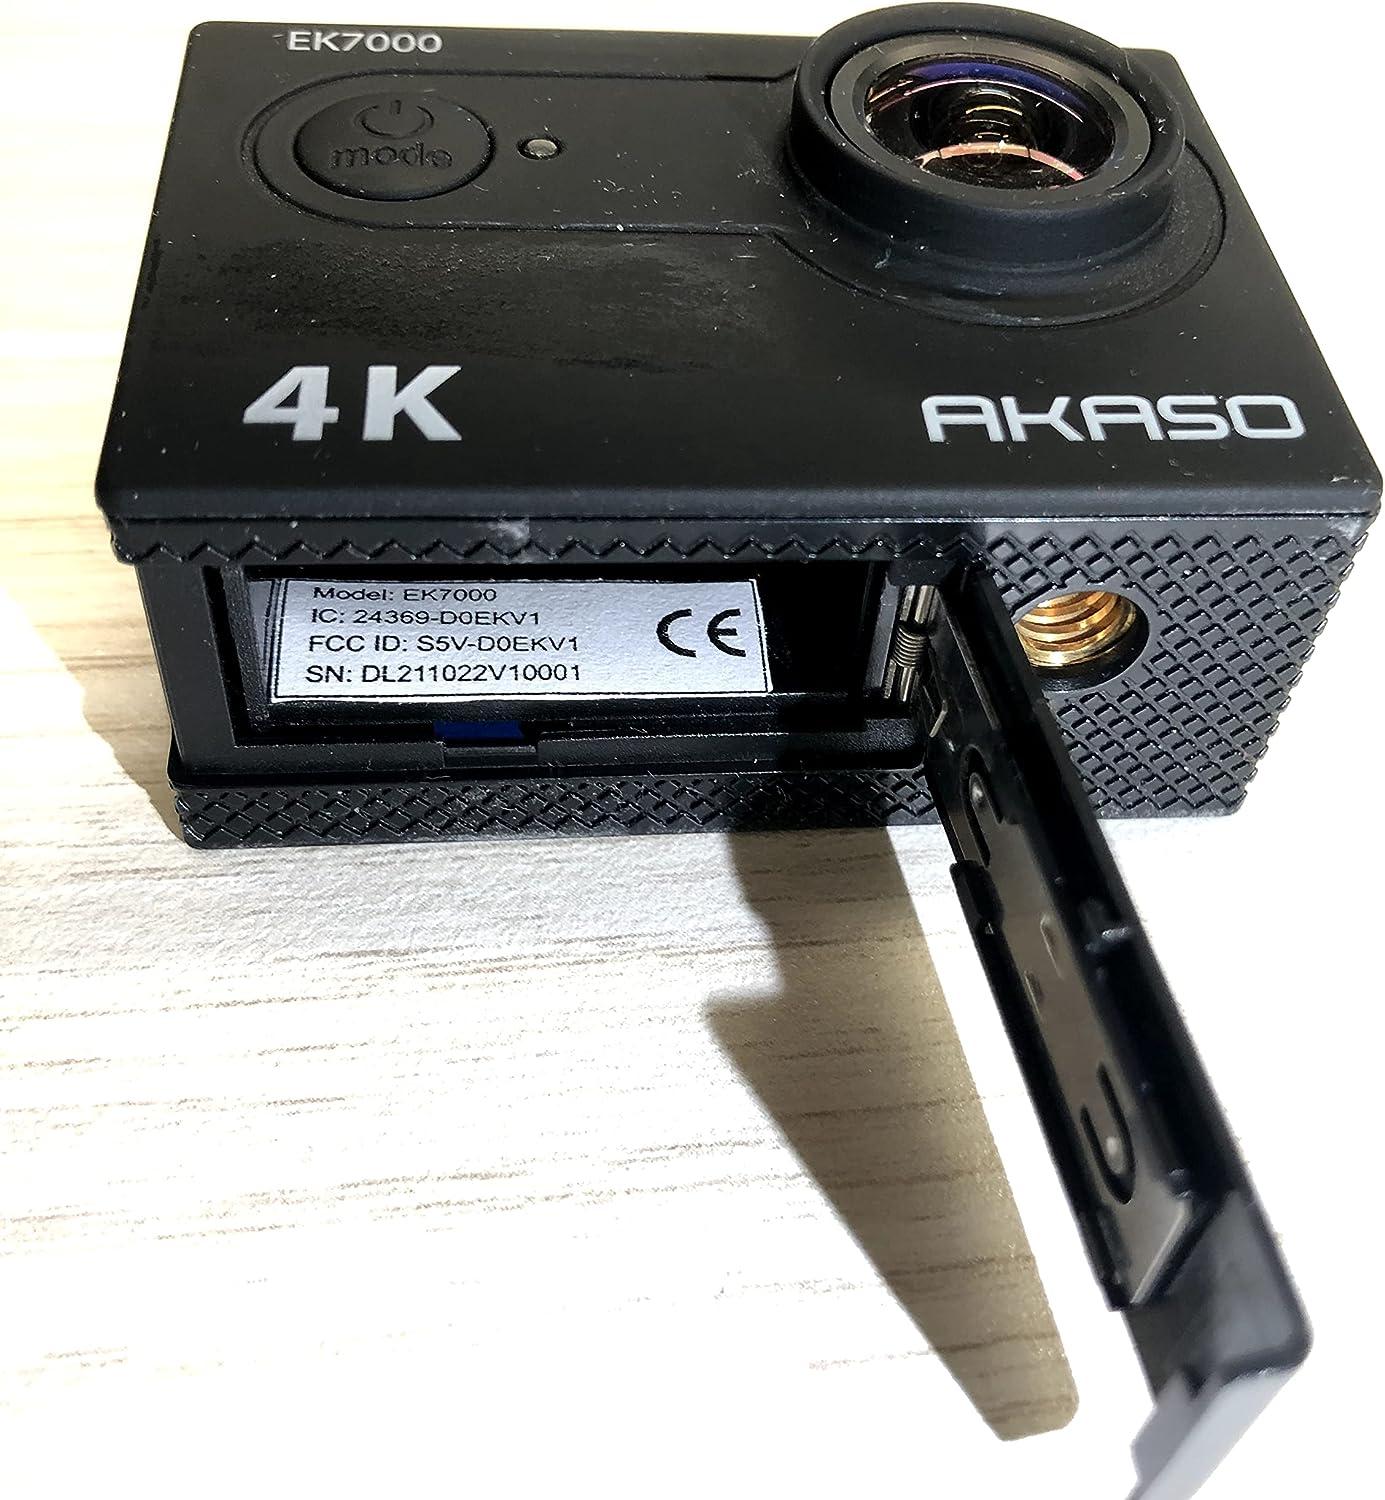 AKASO Tutorial】How to Install AKASO EK7000 Action Camera to